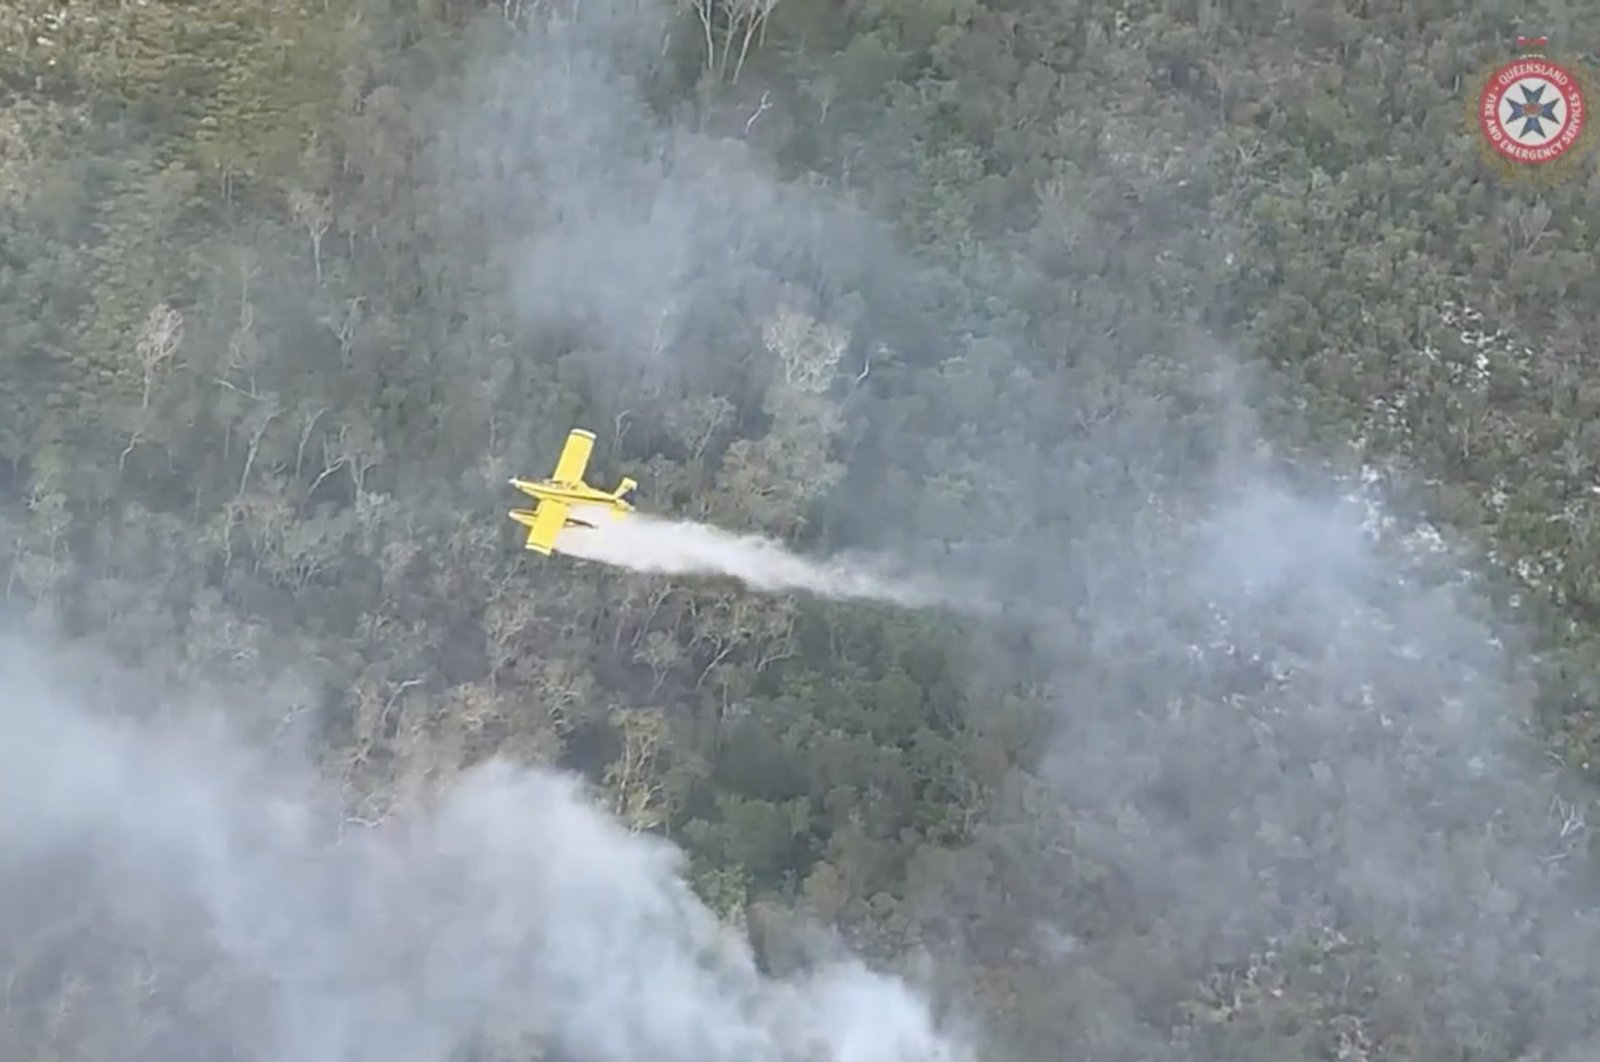 A plane drops water over bushfires on Fraser Island, Queensland, Australia, Nov. 27, 2020. (Queensland Fire and Emergency Services/Handout via Reuters)